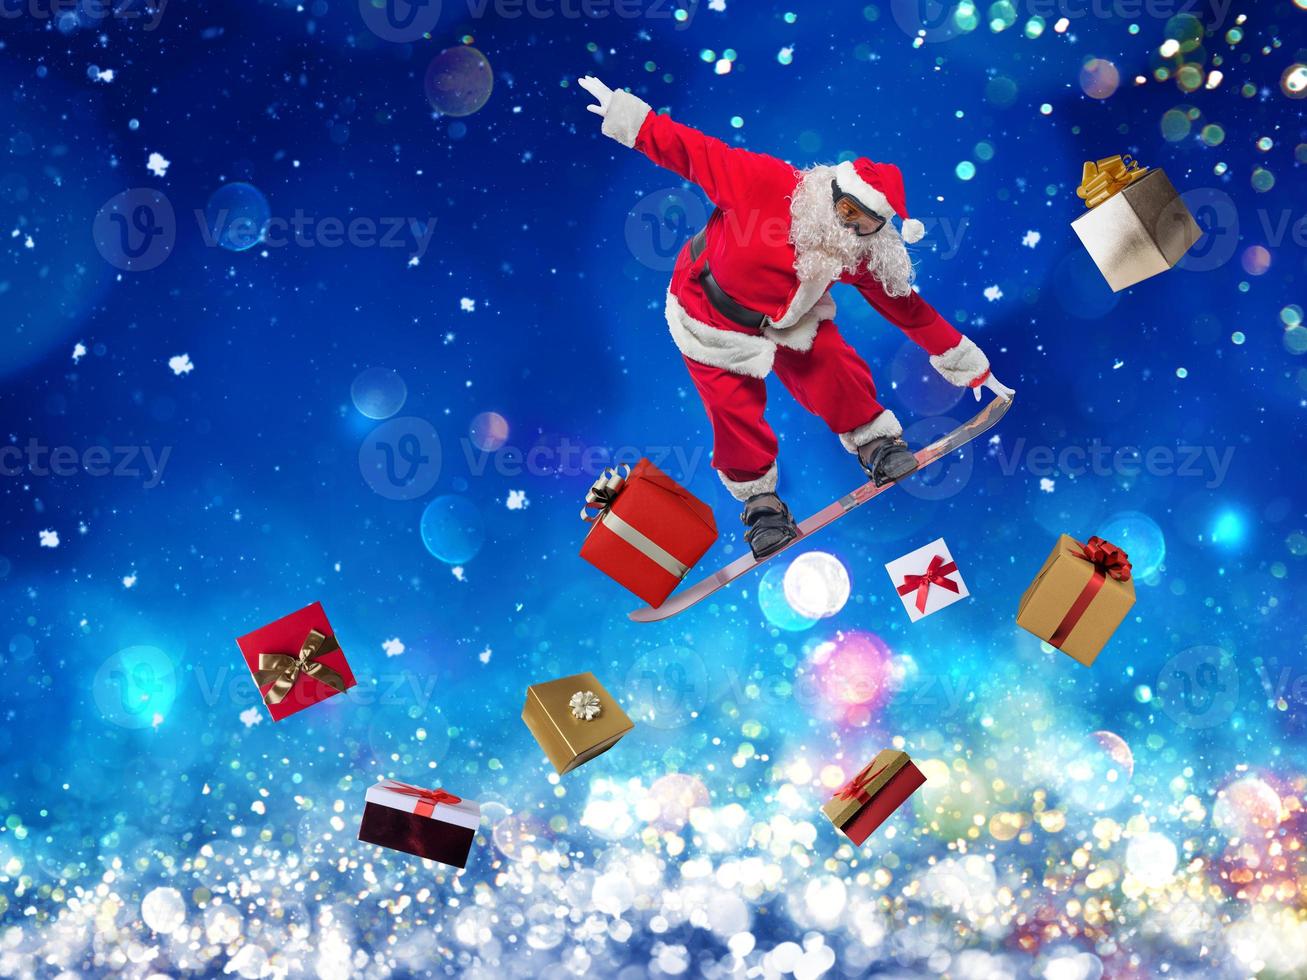 Santa claus jumps with a snowboard board photo